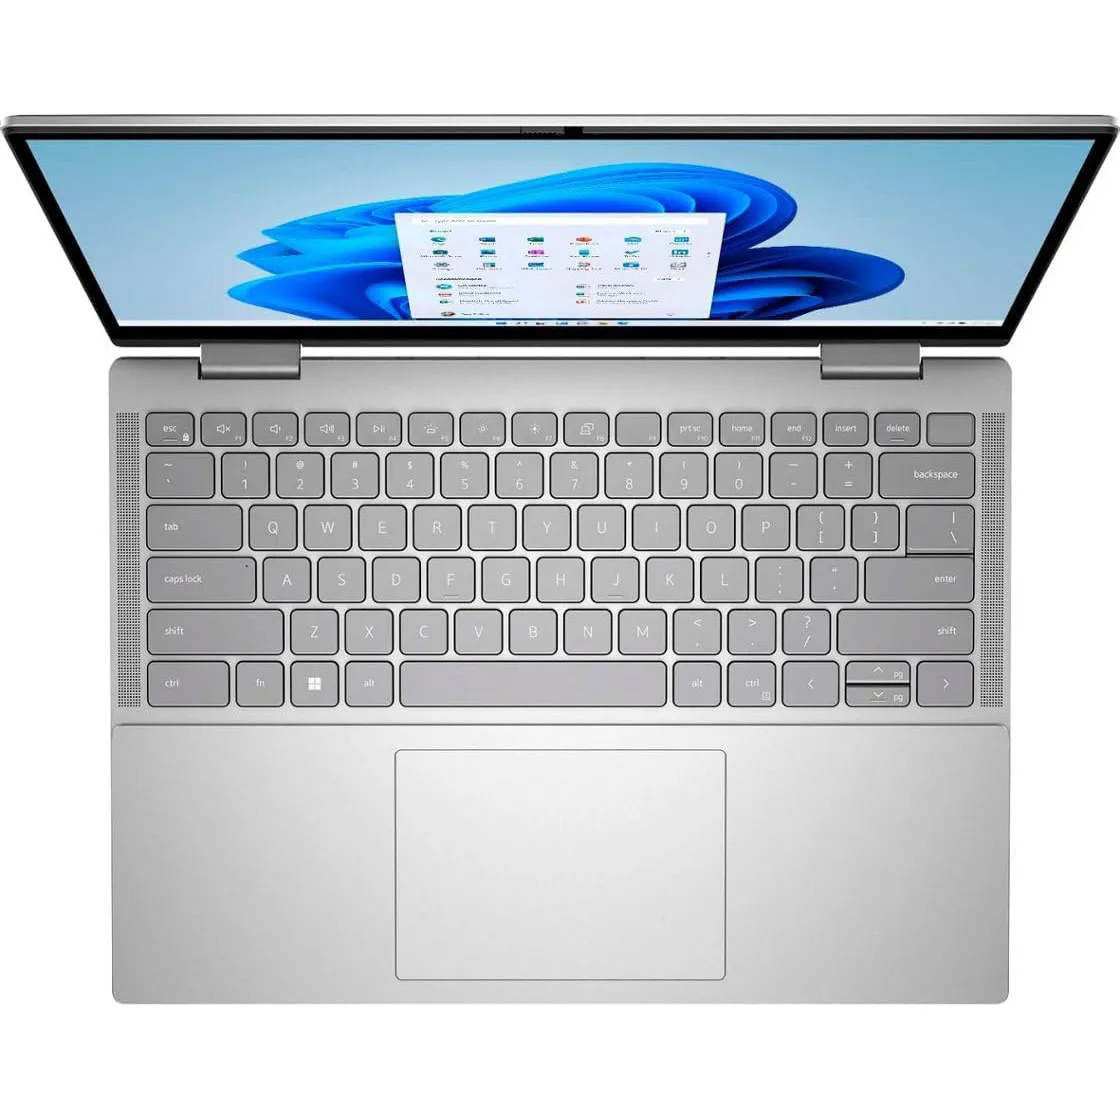 Ноутбук-трансформер Dell Inspiron 14 7430 (i7430-5800SLV-PUS)